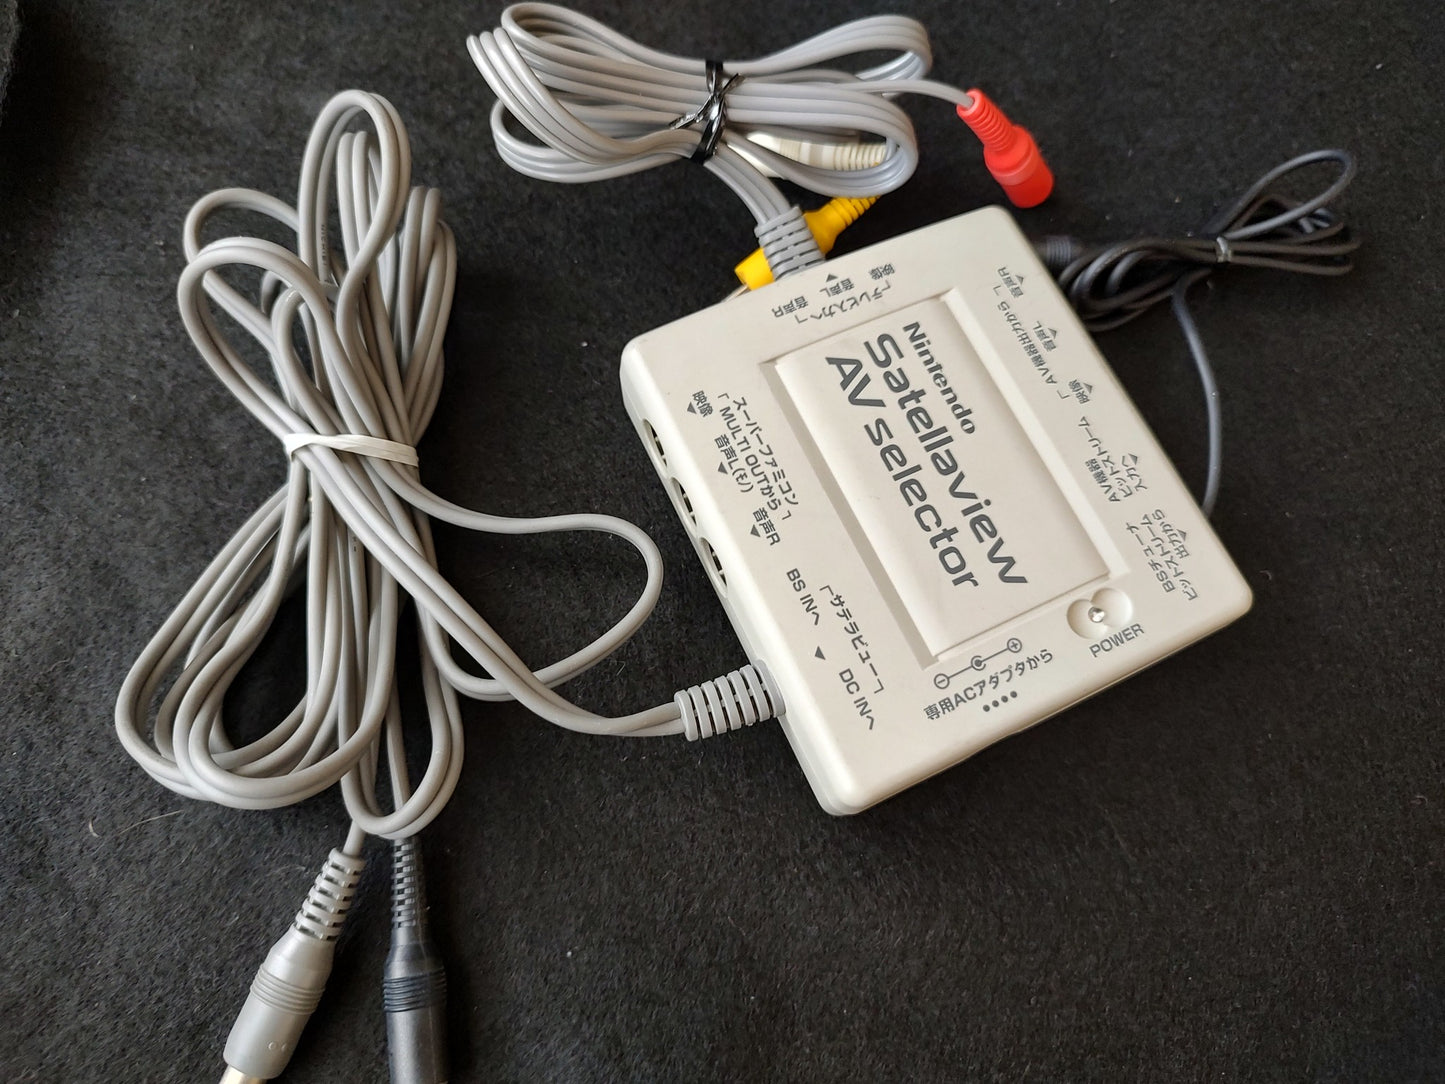 Nintendo Satellaview SHVC-029 and Accessories set Super Famicom console-f0628-